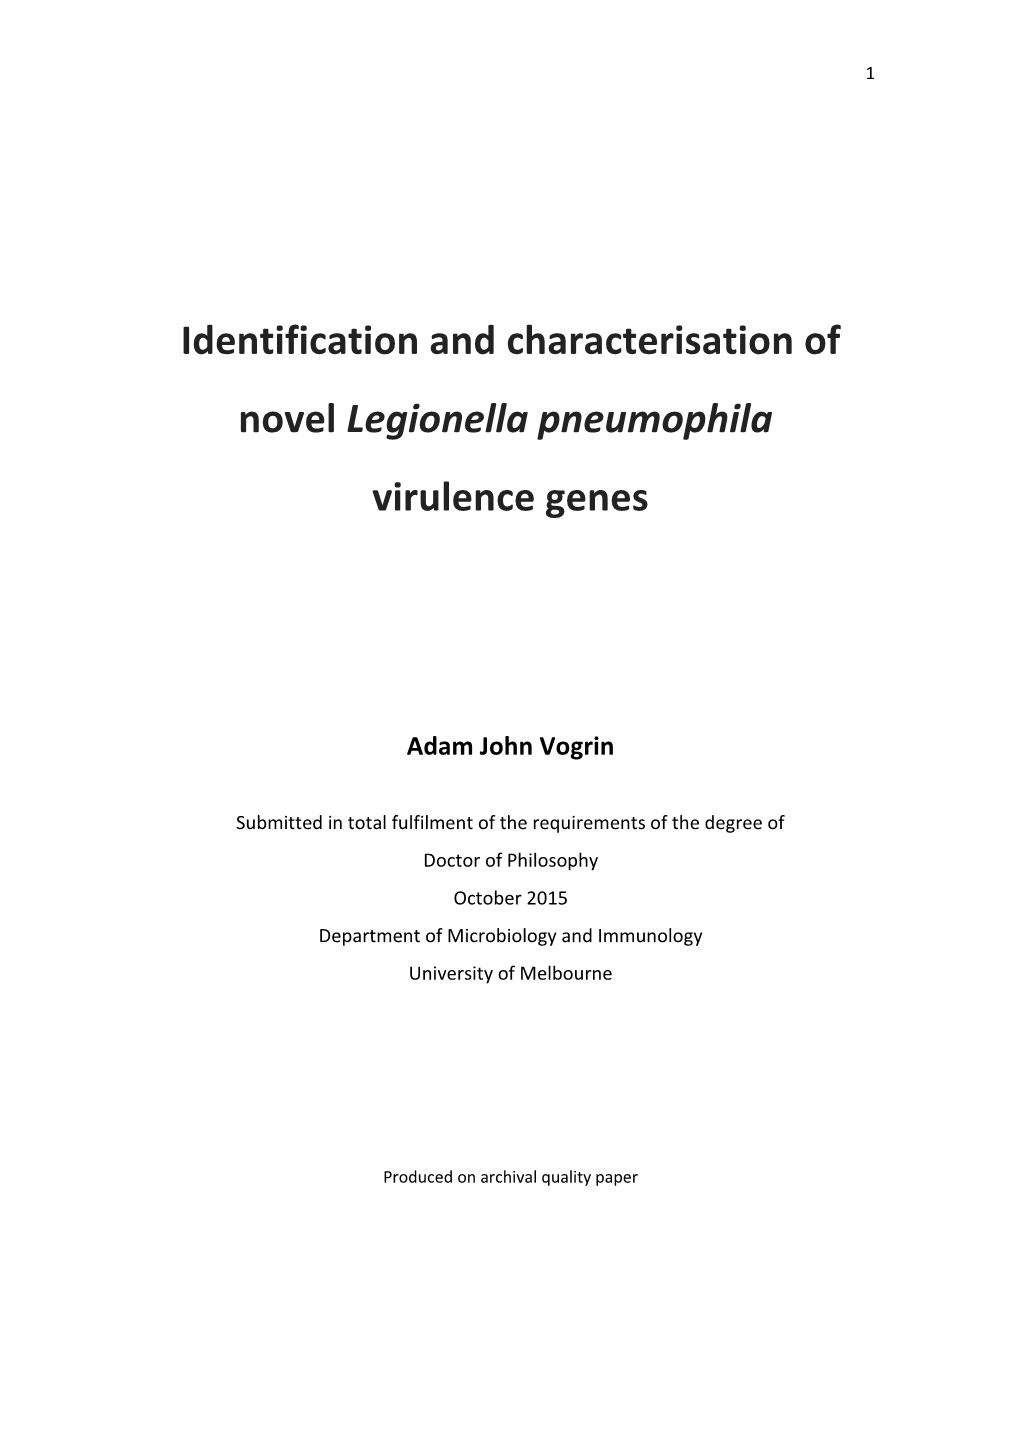 Identification and Characterisation of Novel Legionella Pneumophila Virulence Genes